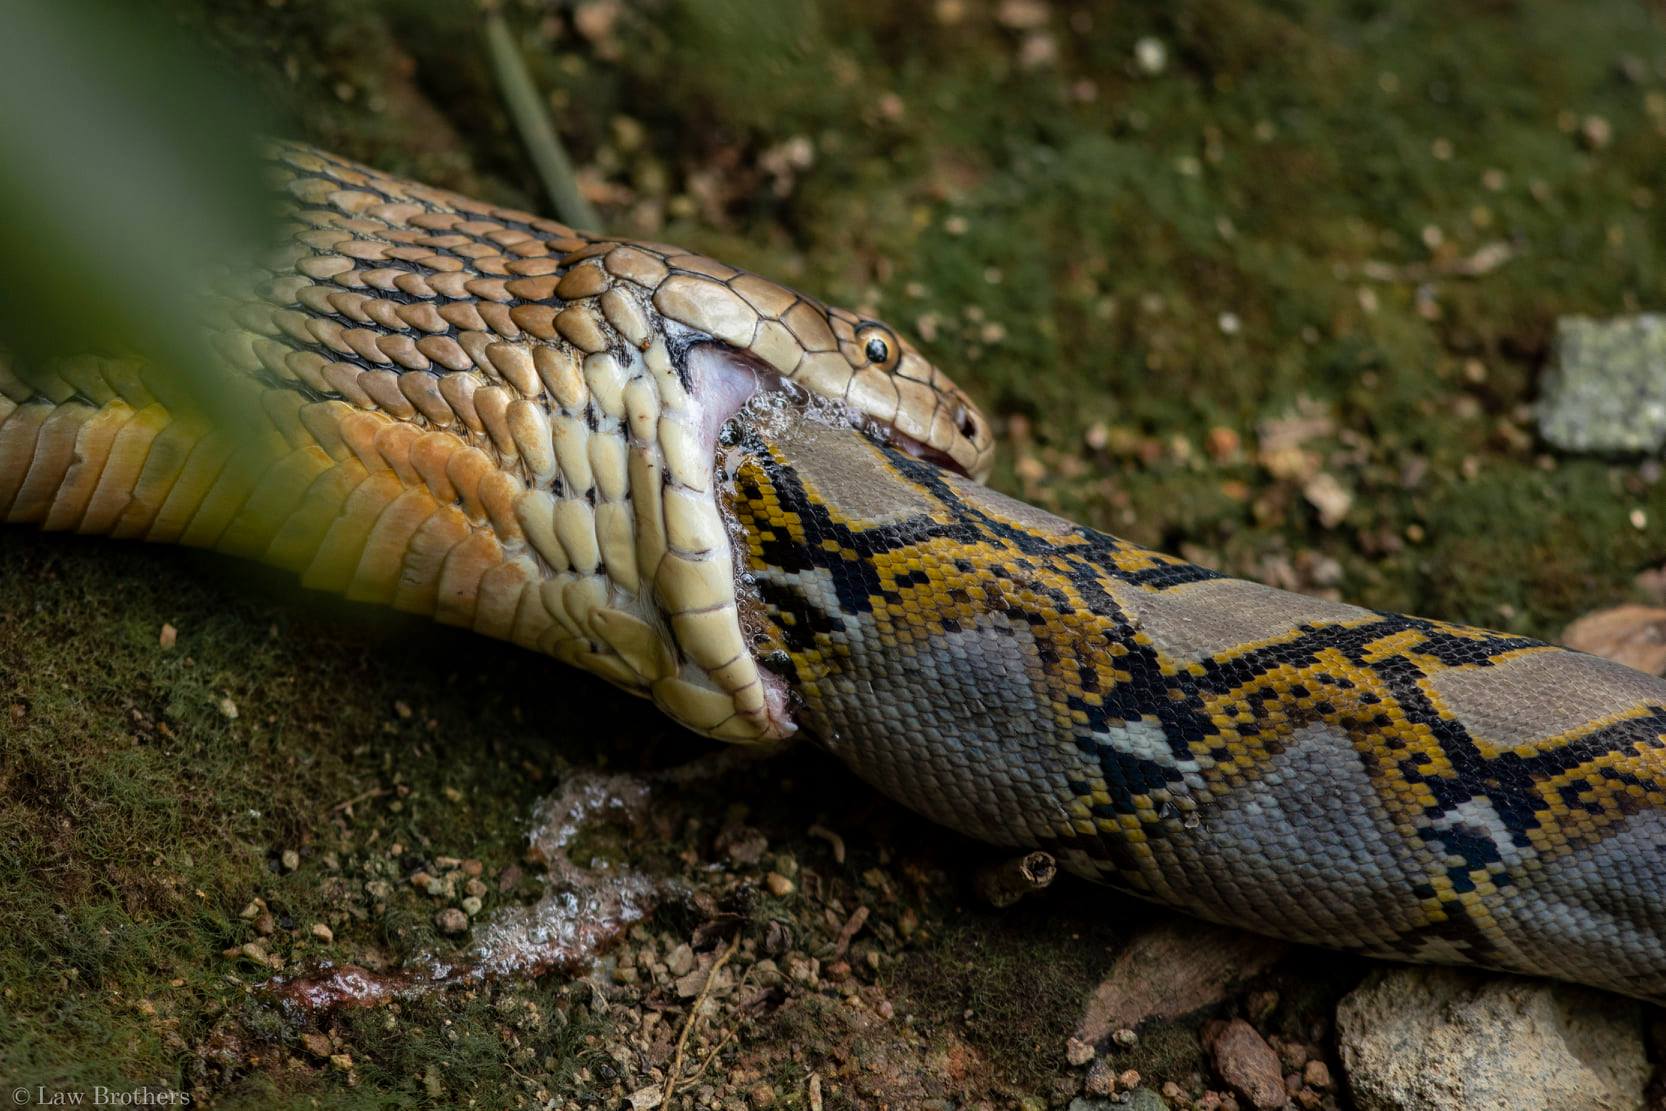 King Cobra Eats Python Whole At Sungei Buloh Photographer Captures